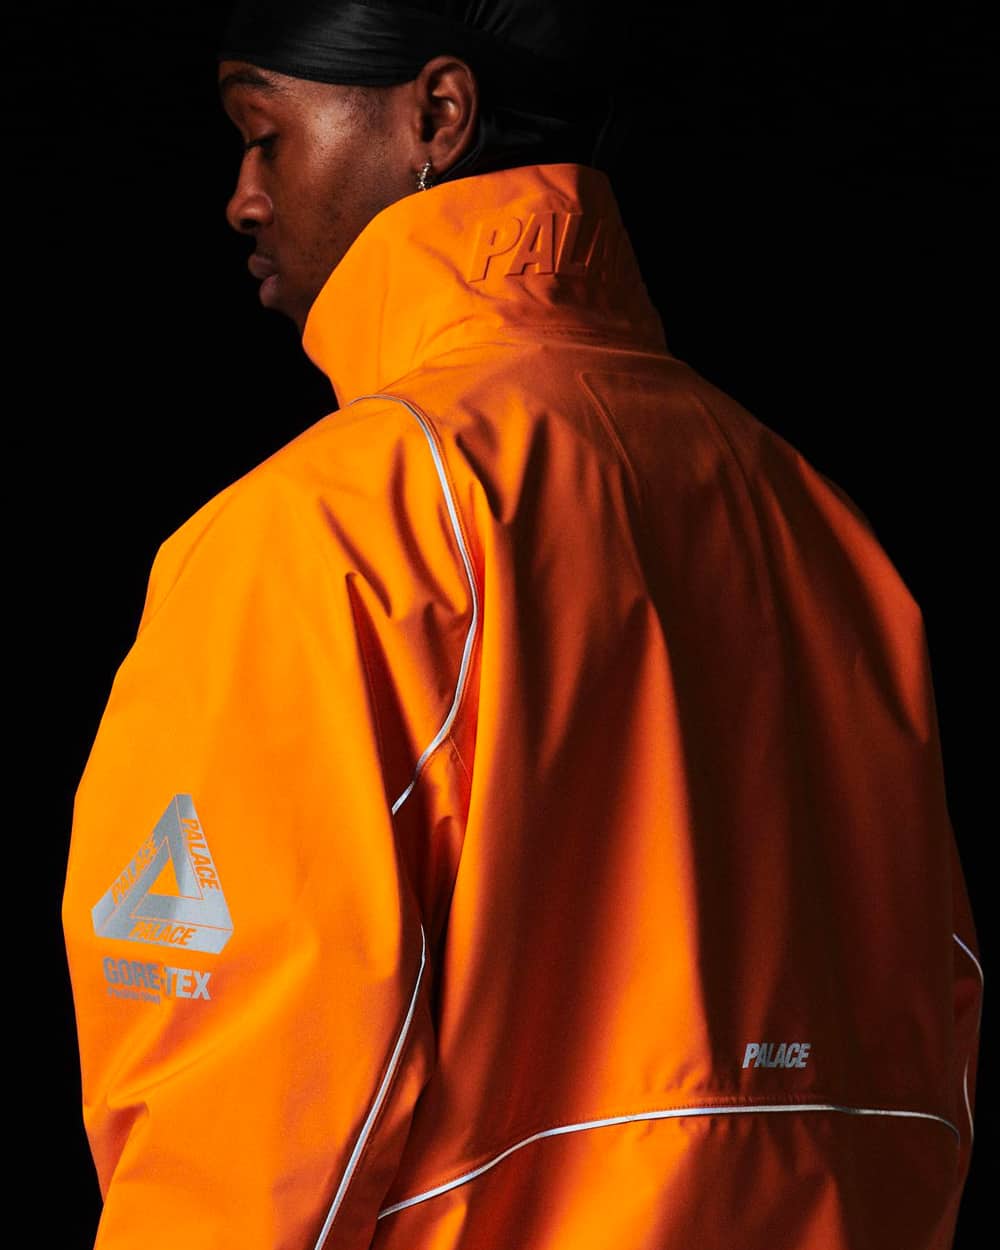 Black man wearing a bright orange Palace windbreaker jacket with logo on the arm